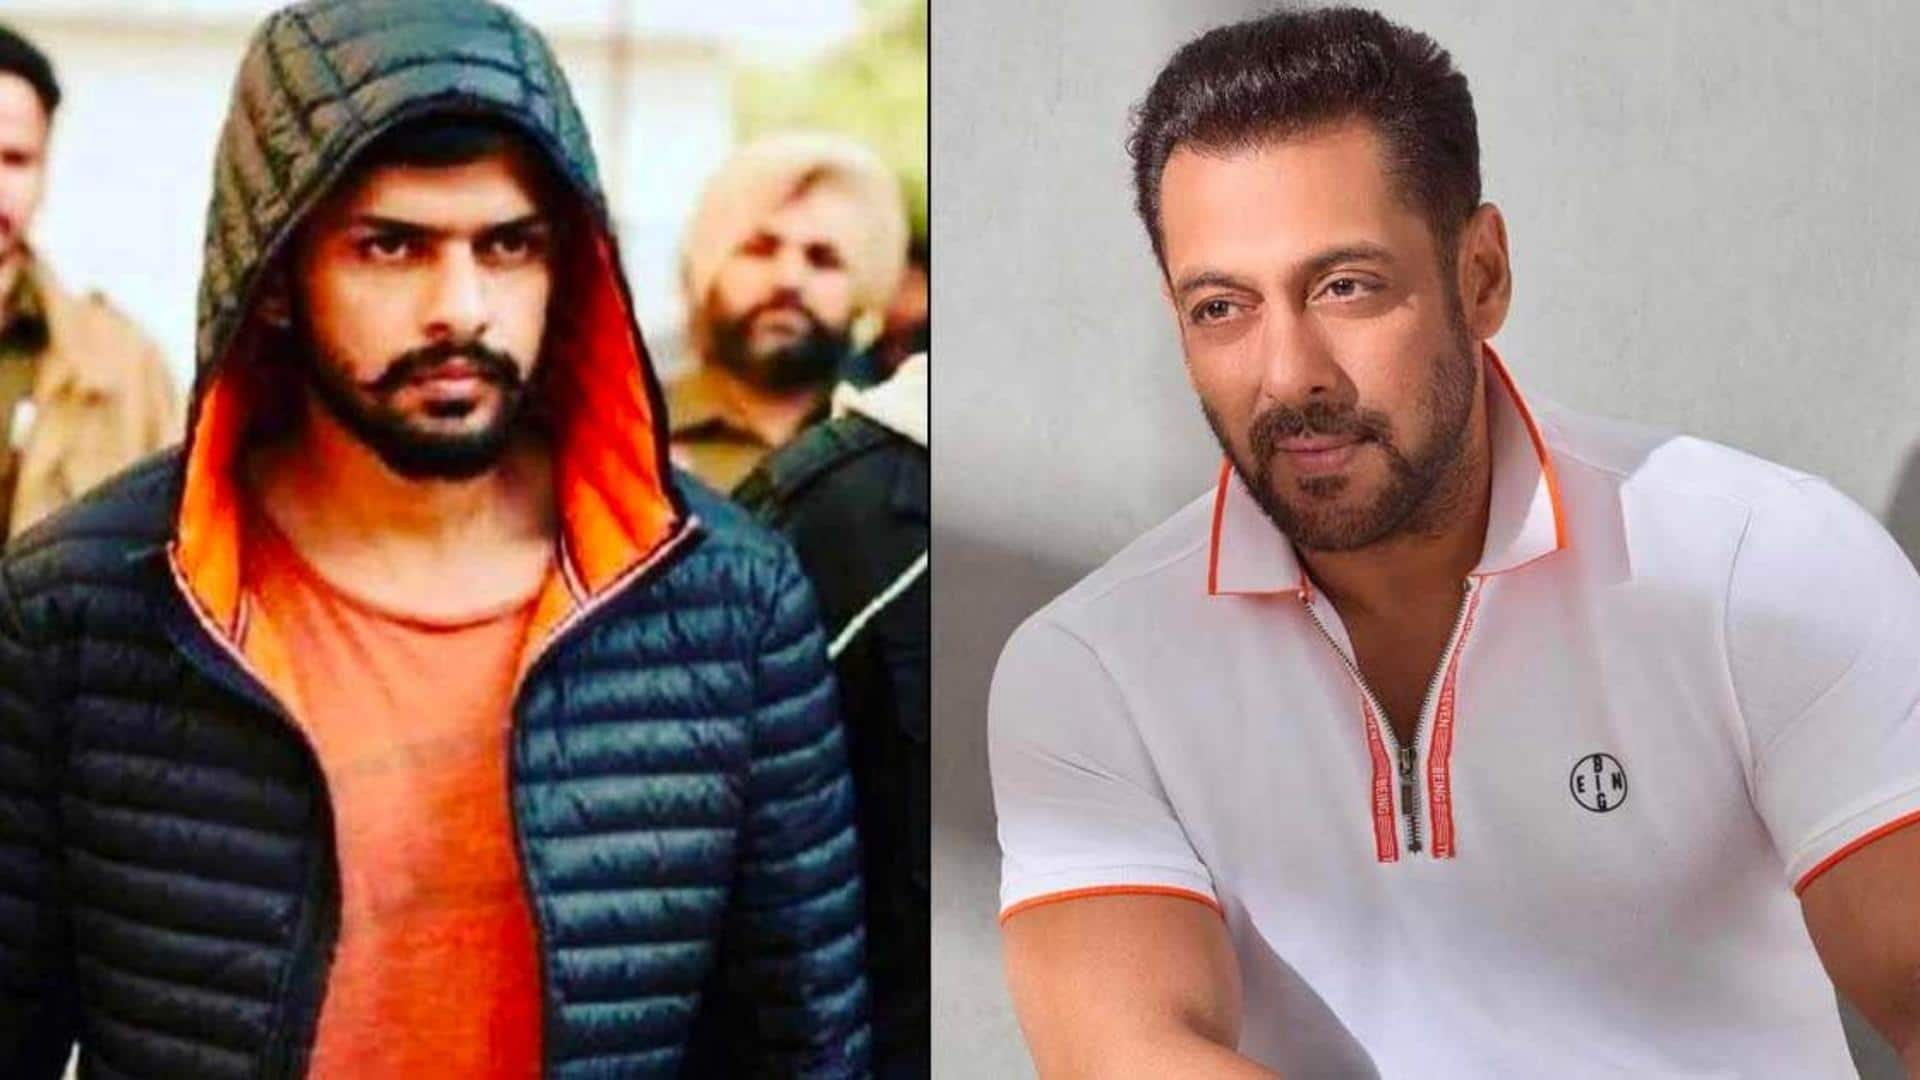 Gangster Lawrence Bishnoi threatens Salman Khan in a viral video